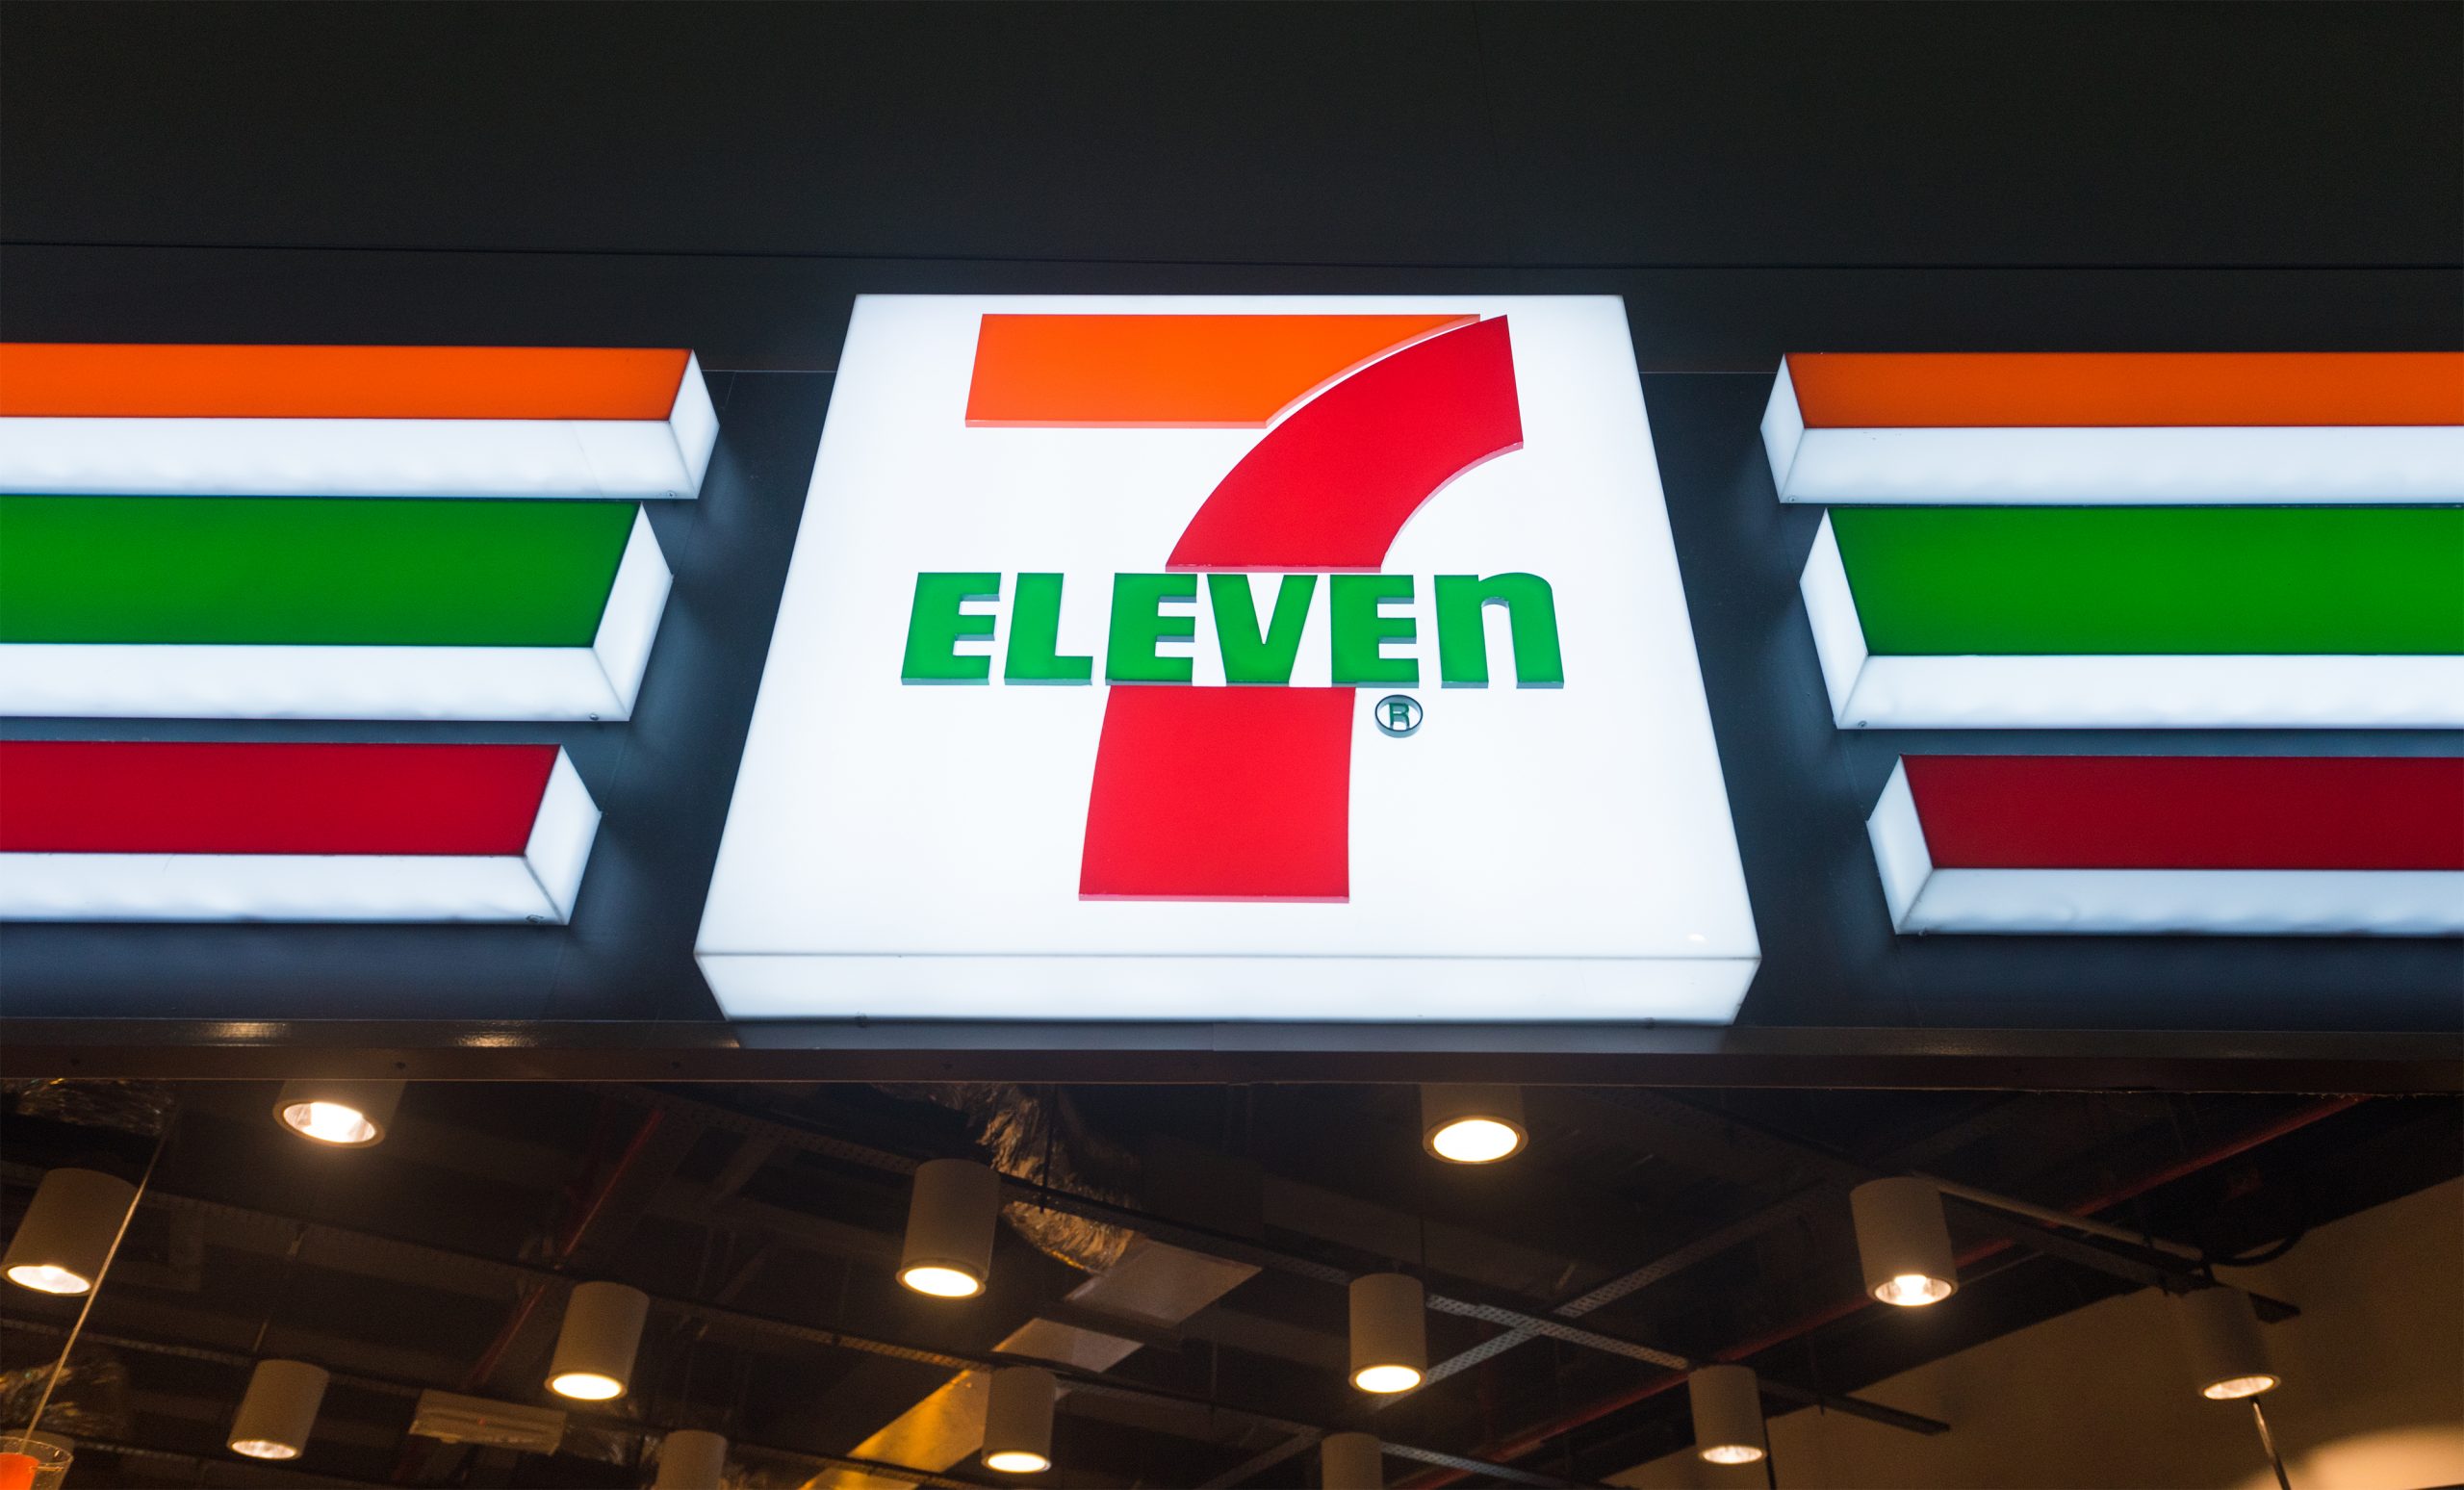 Future Retail, 7-Eleven Terminate Partnership